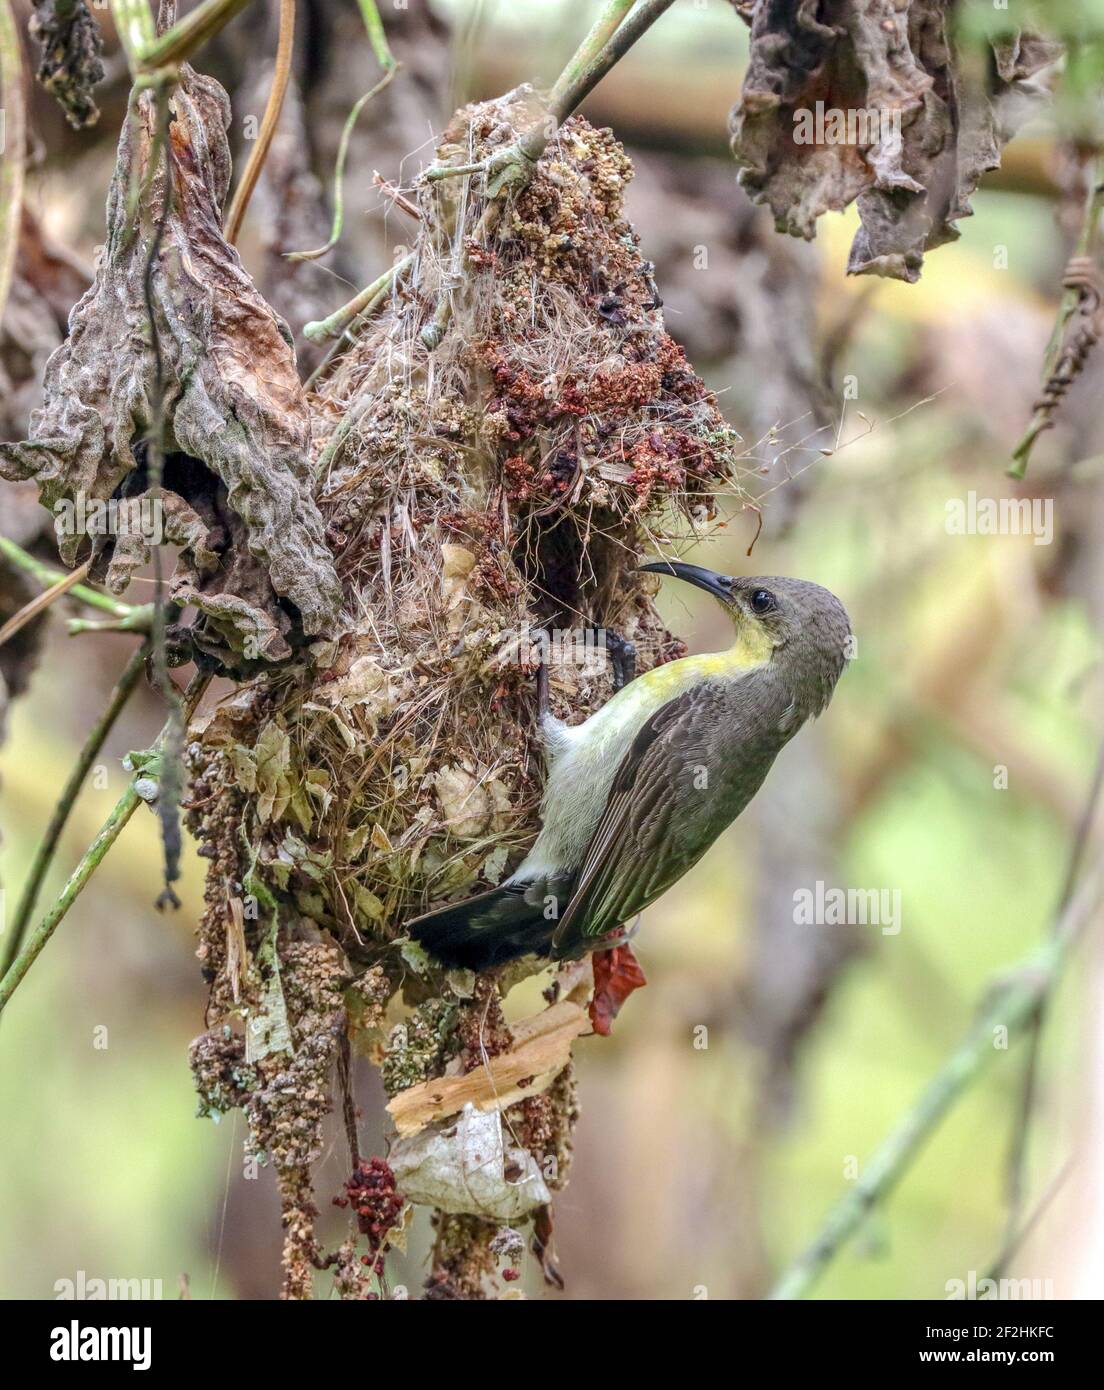 sunbird violet femelle avec son nid Banque D'Images